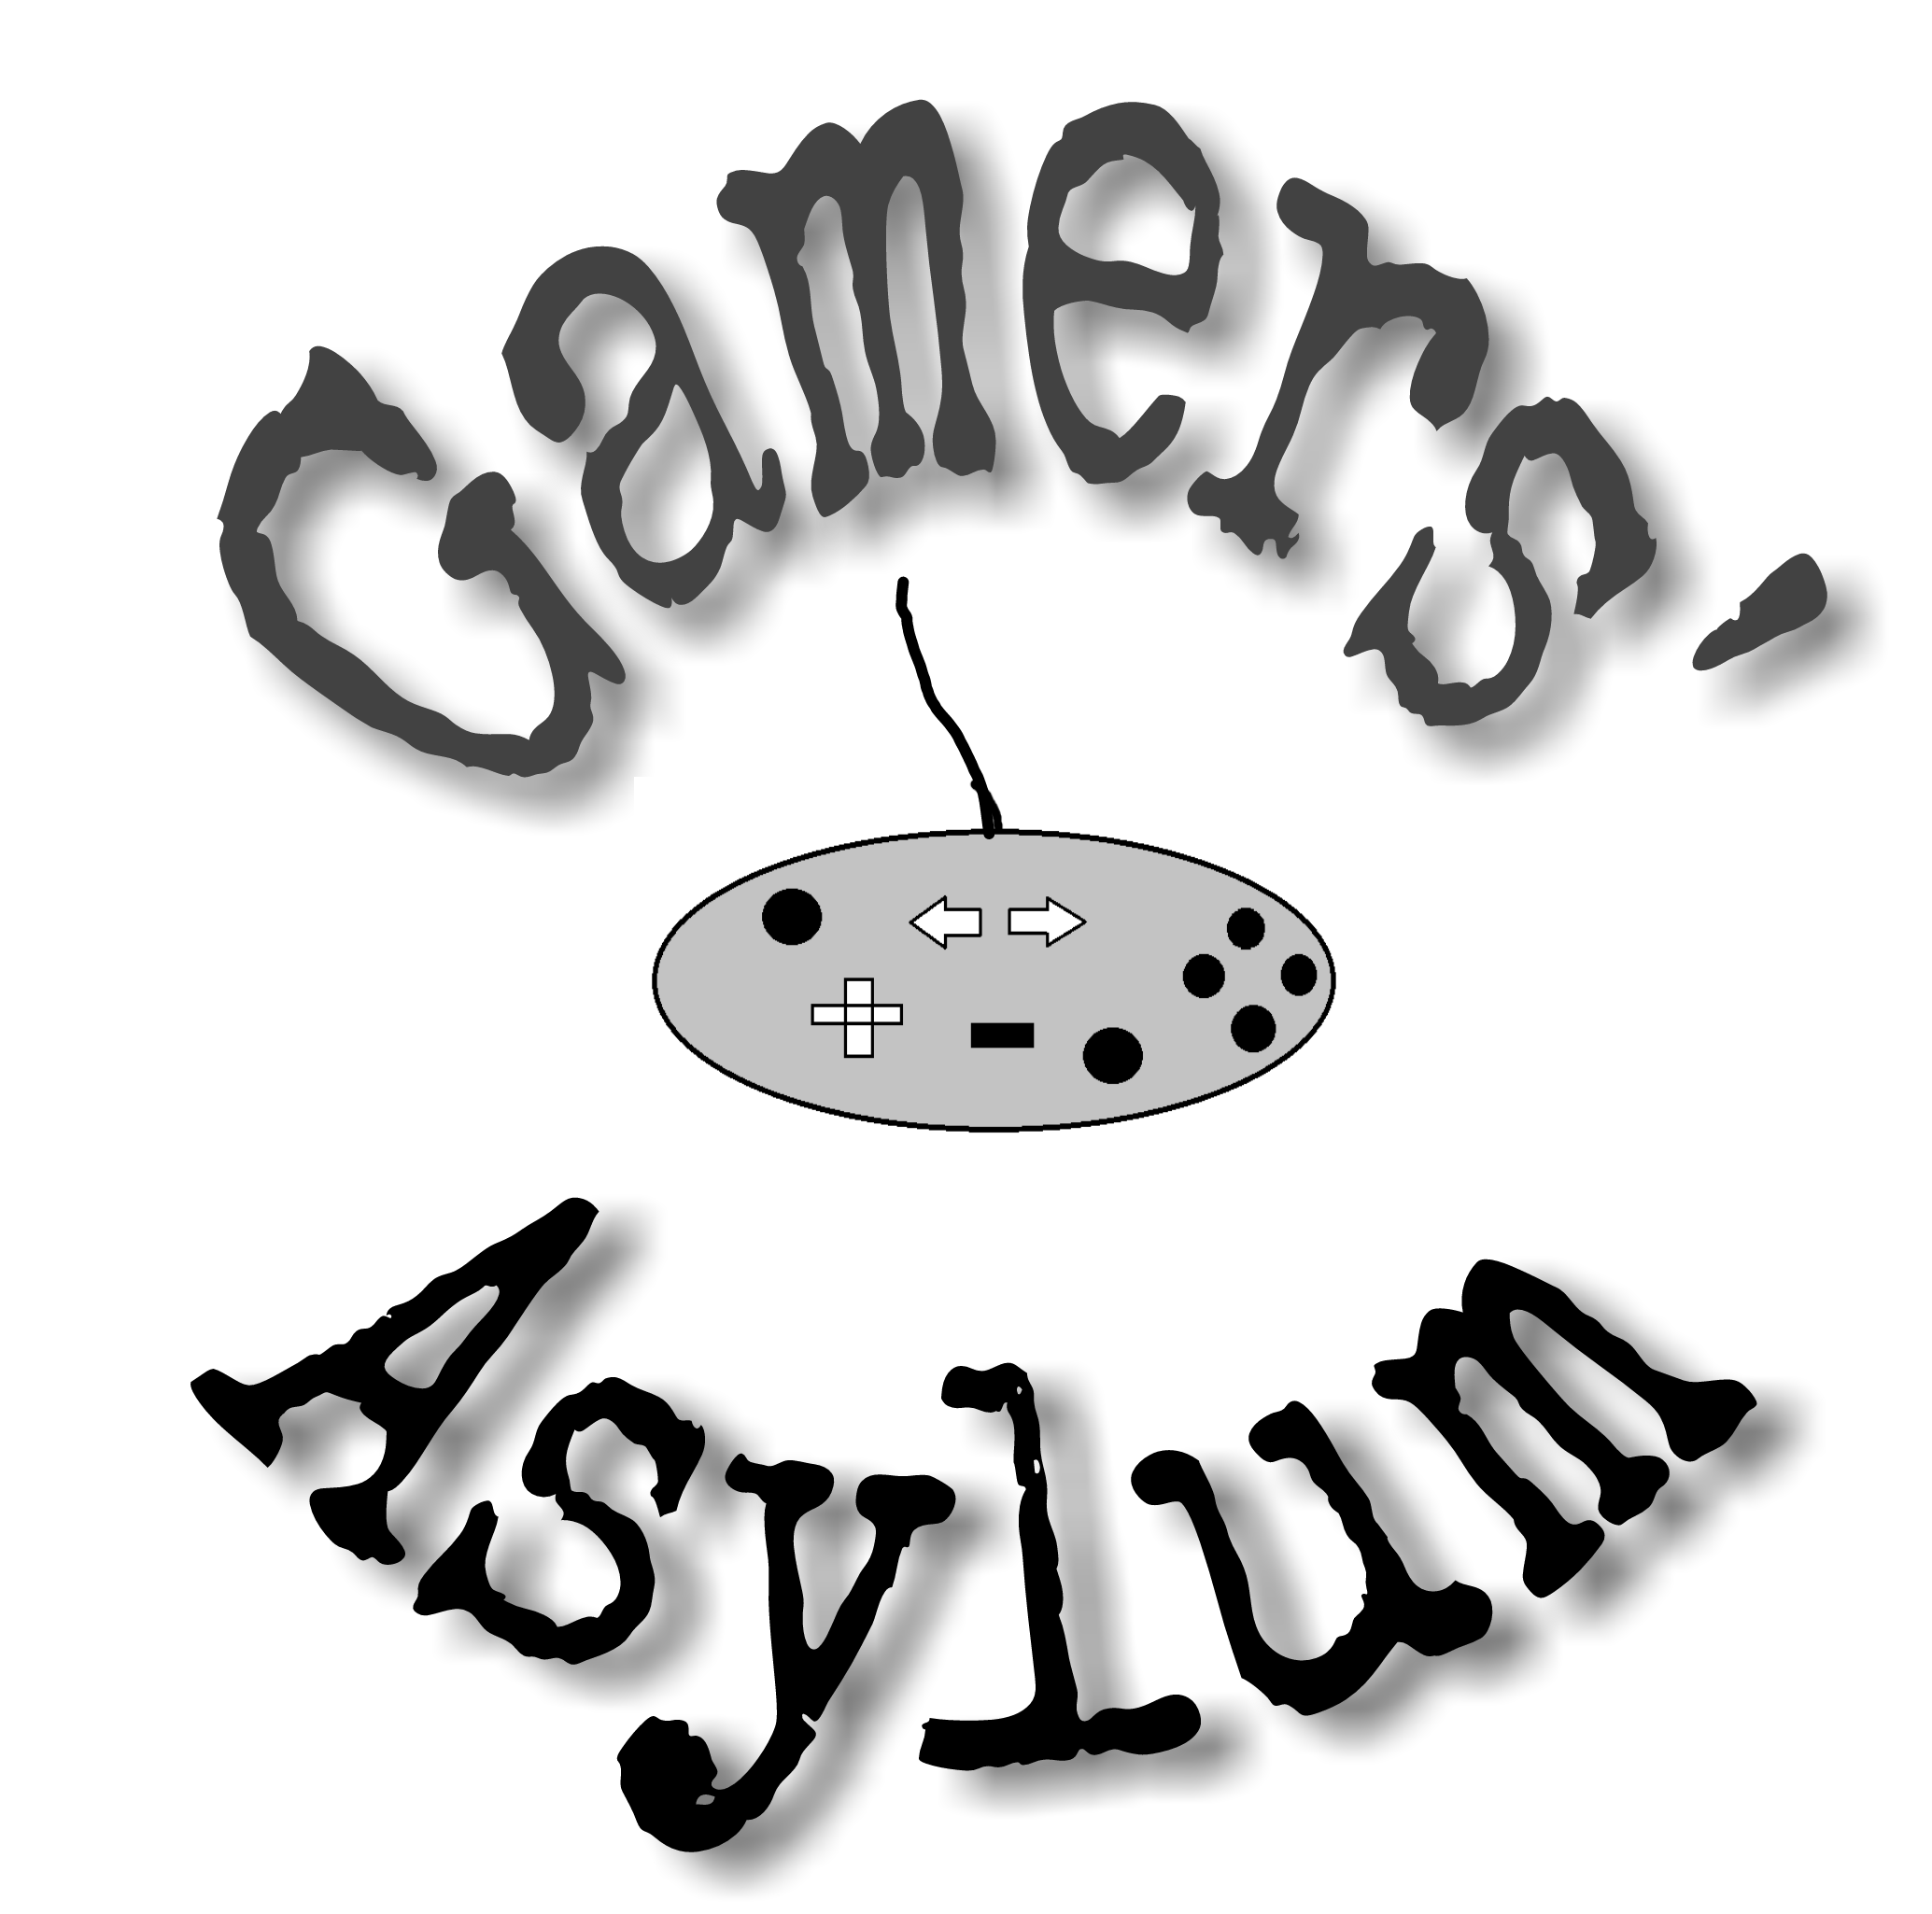 Gamers' asylum 	©